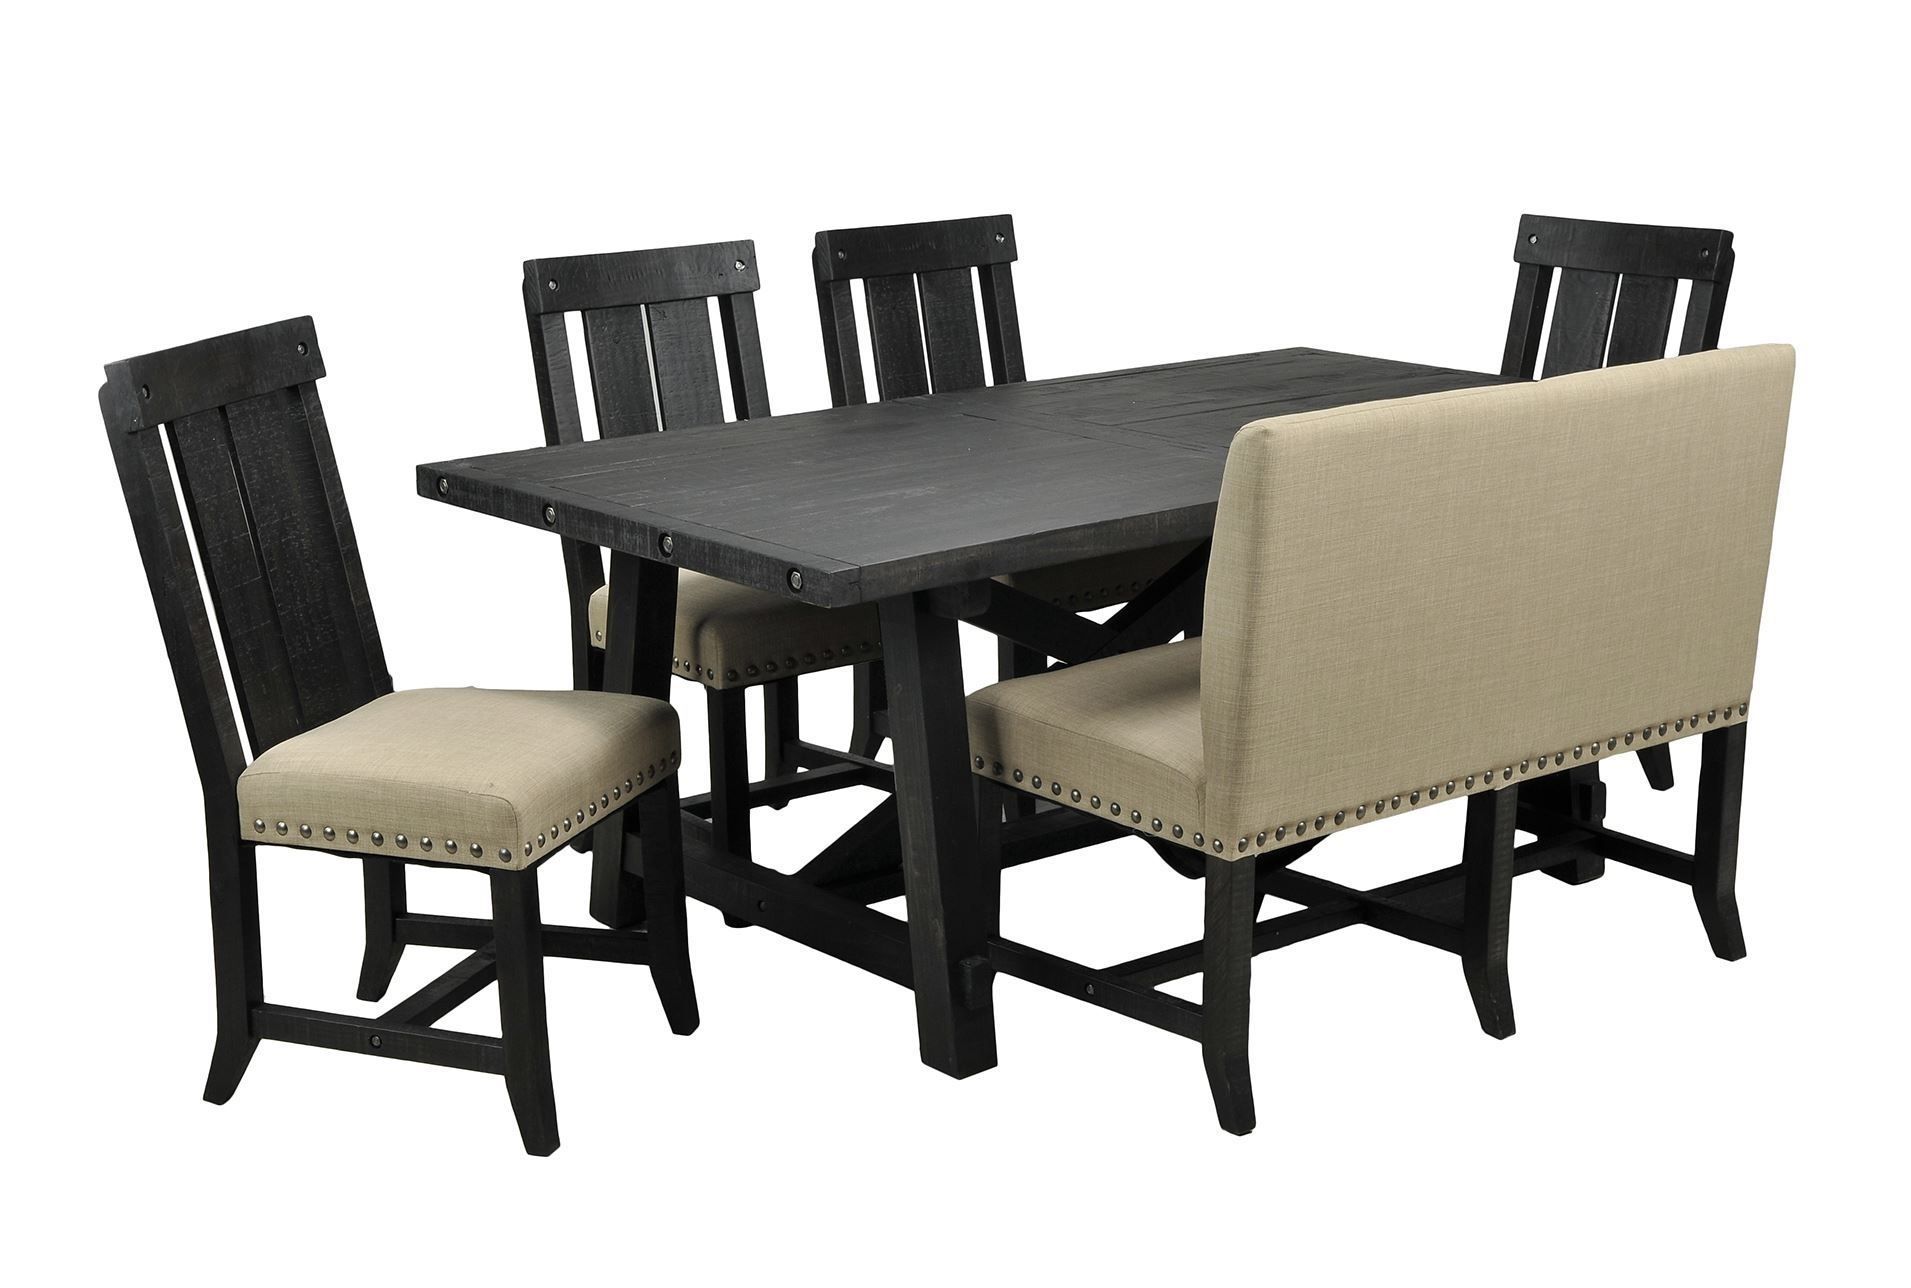 Jaxon 6 Piece Rectangle Dining Set W/bench & Wood Chairs, Café Intended For 2017 Jaxon 7 Piece Rectangle Dining Sets With Wood Chairs (View 3 of 20)